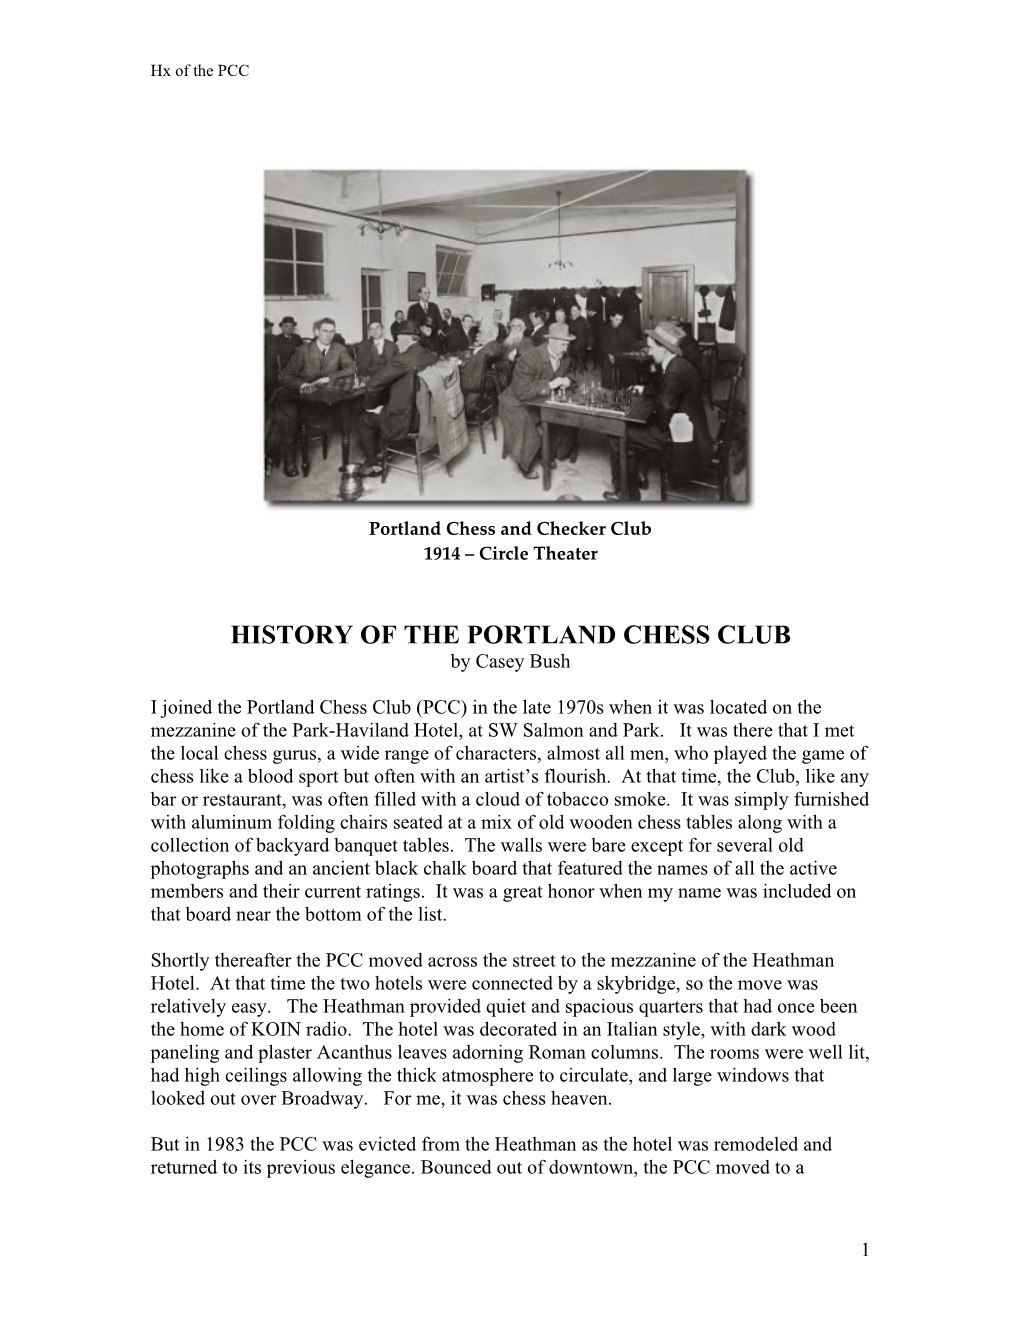 HISTORY of the PORTLAND CHESS CLUB by Casey Bush